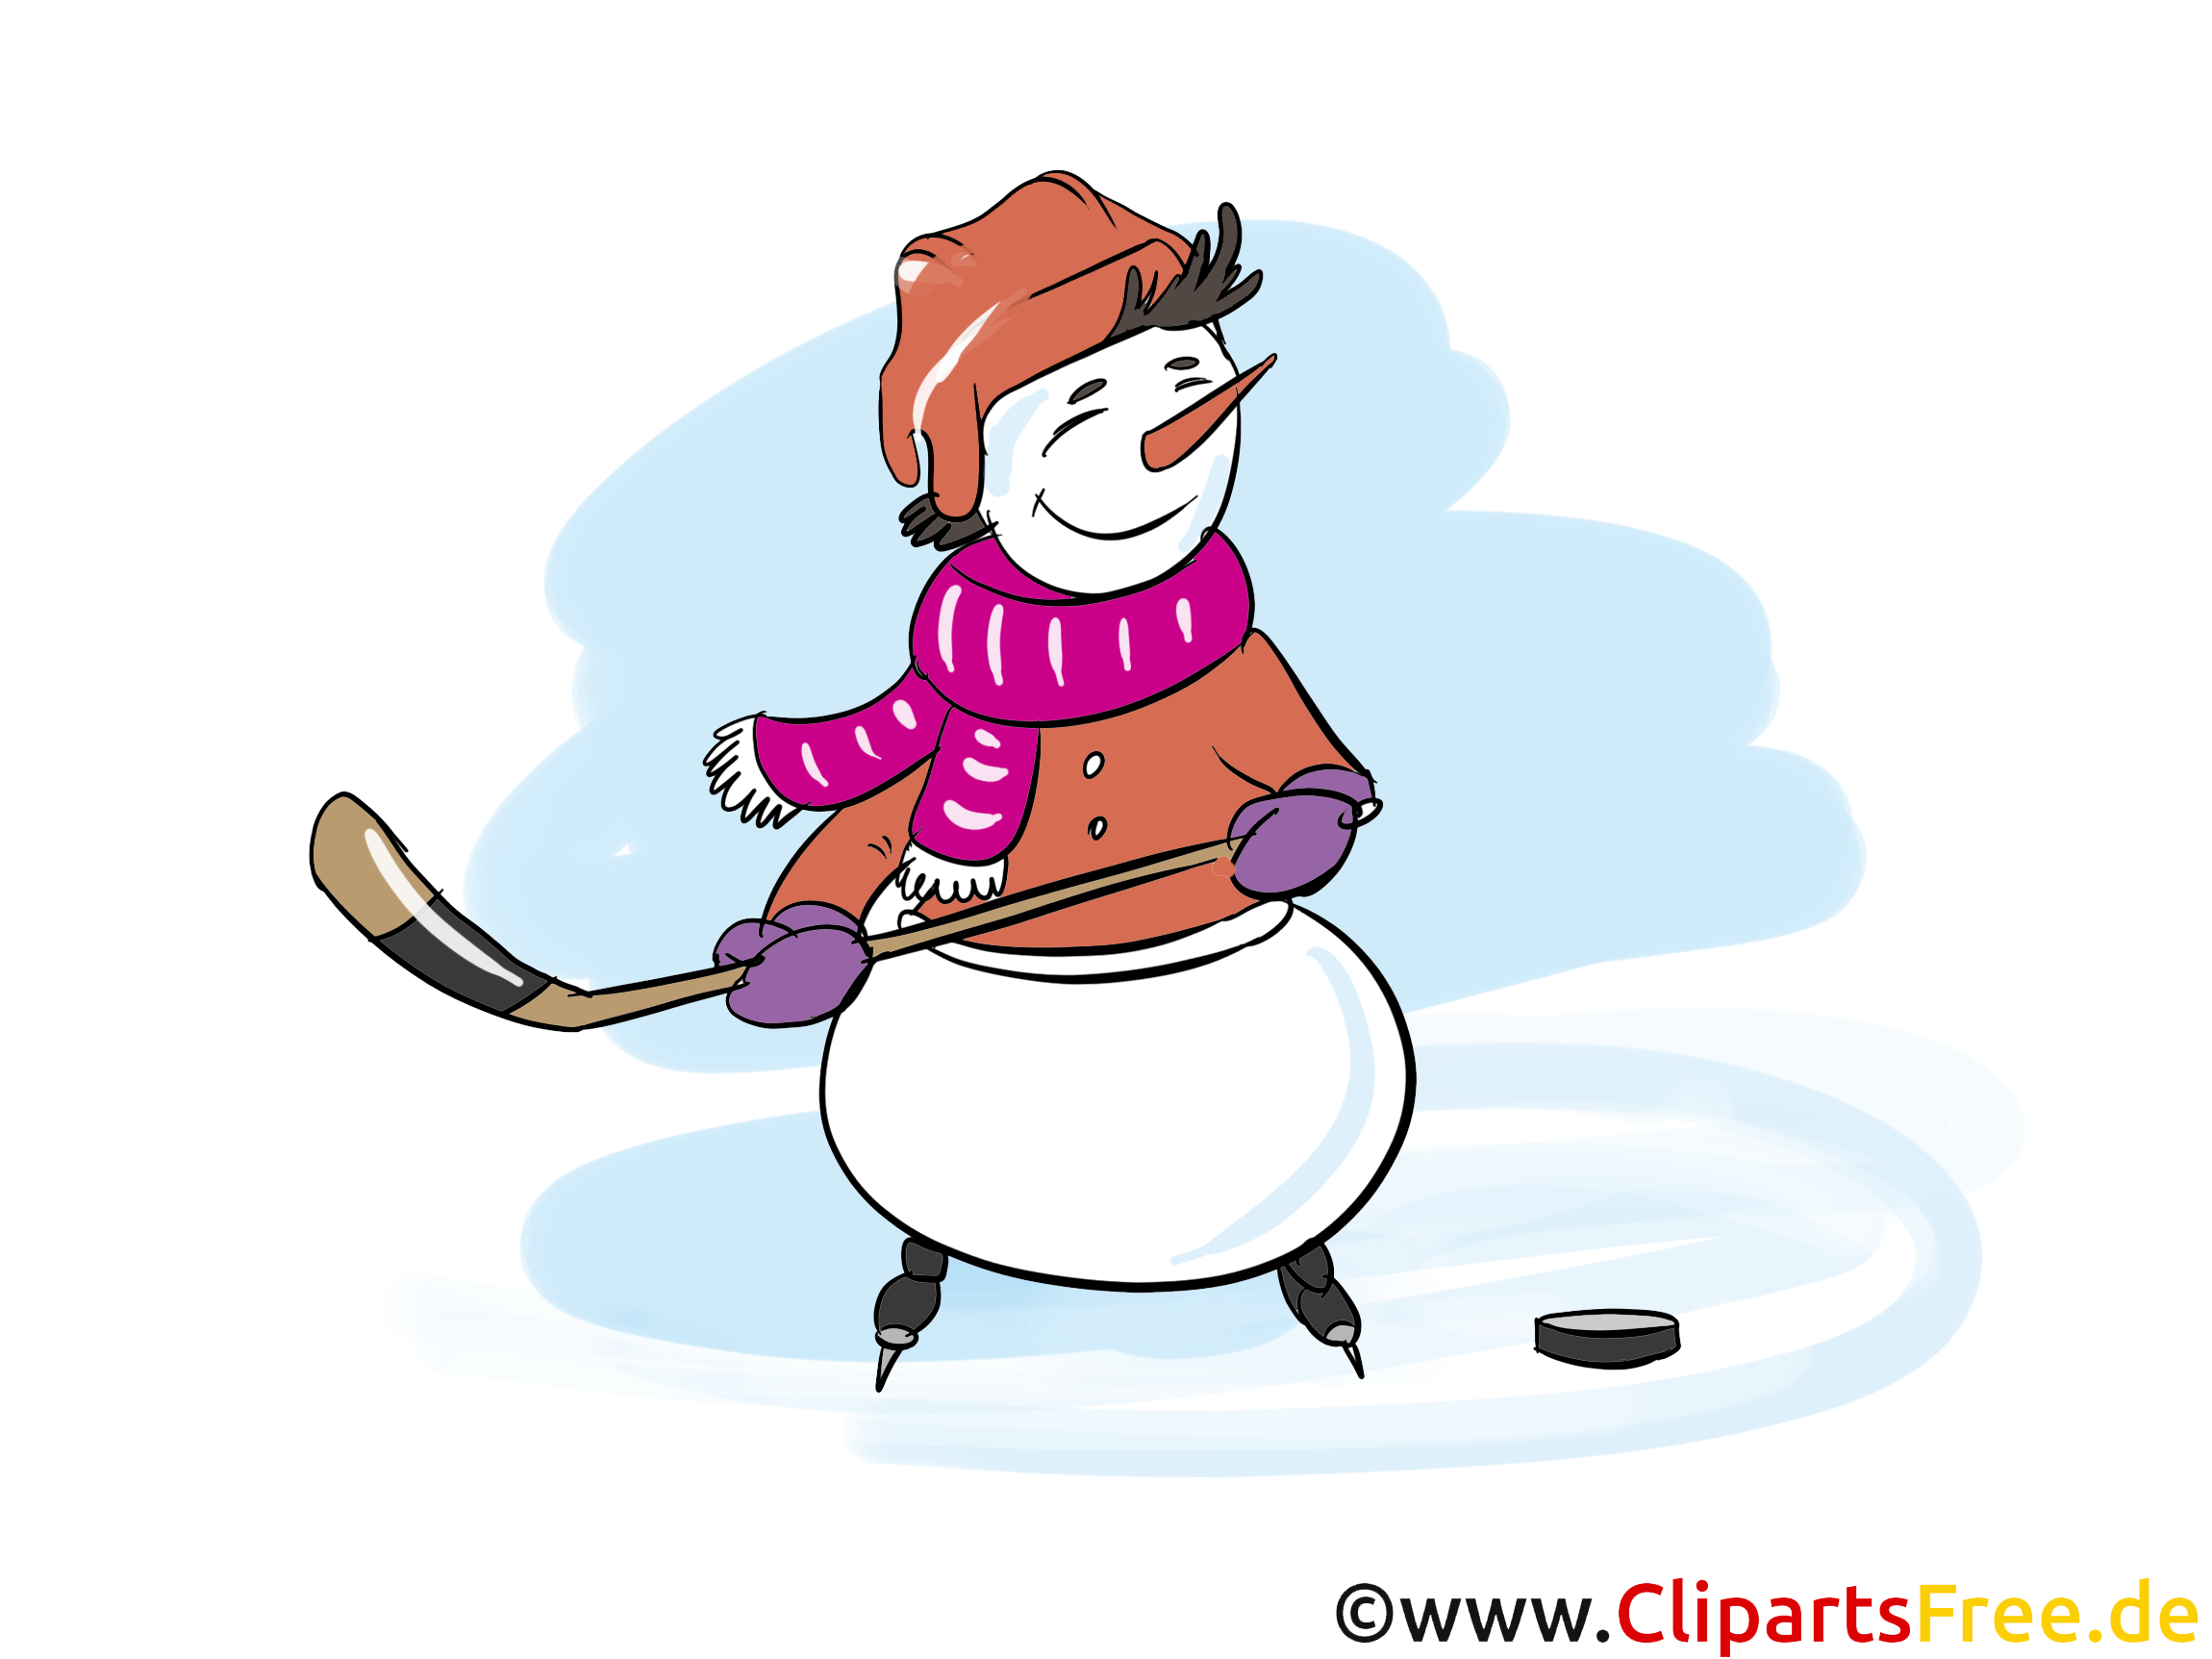 Bonhomme de neige dessin gratuit - Hockey image